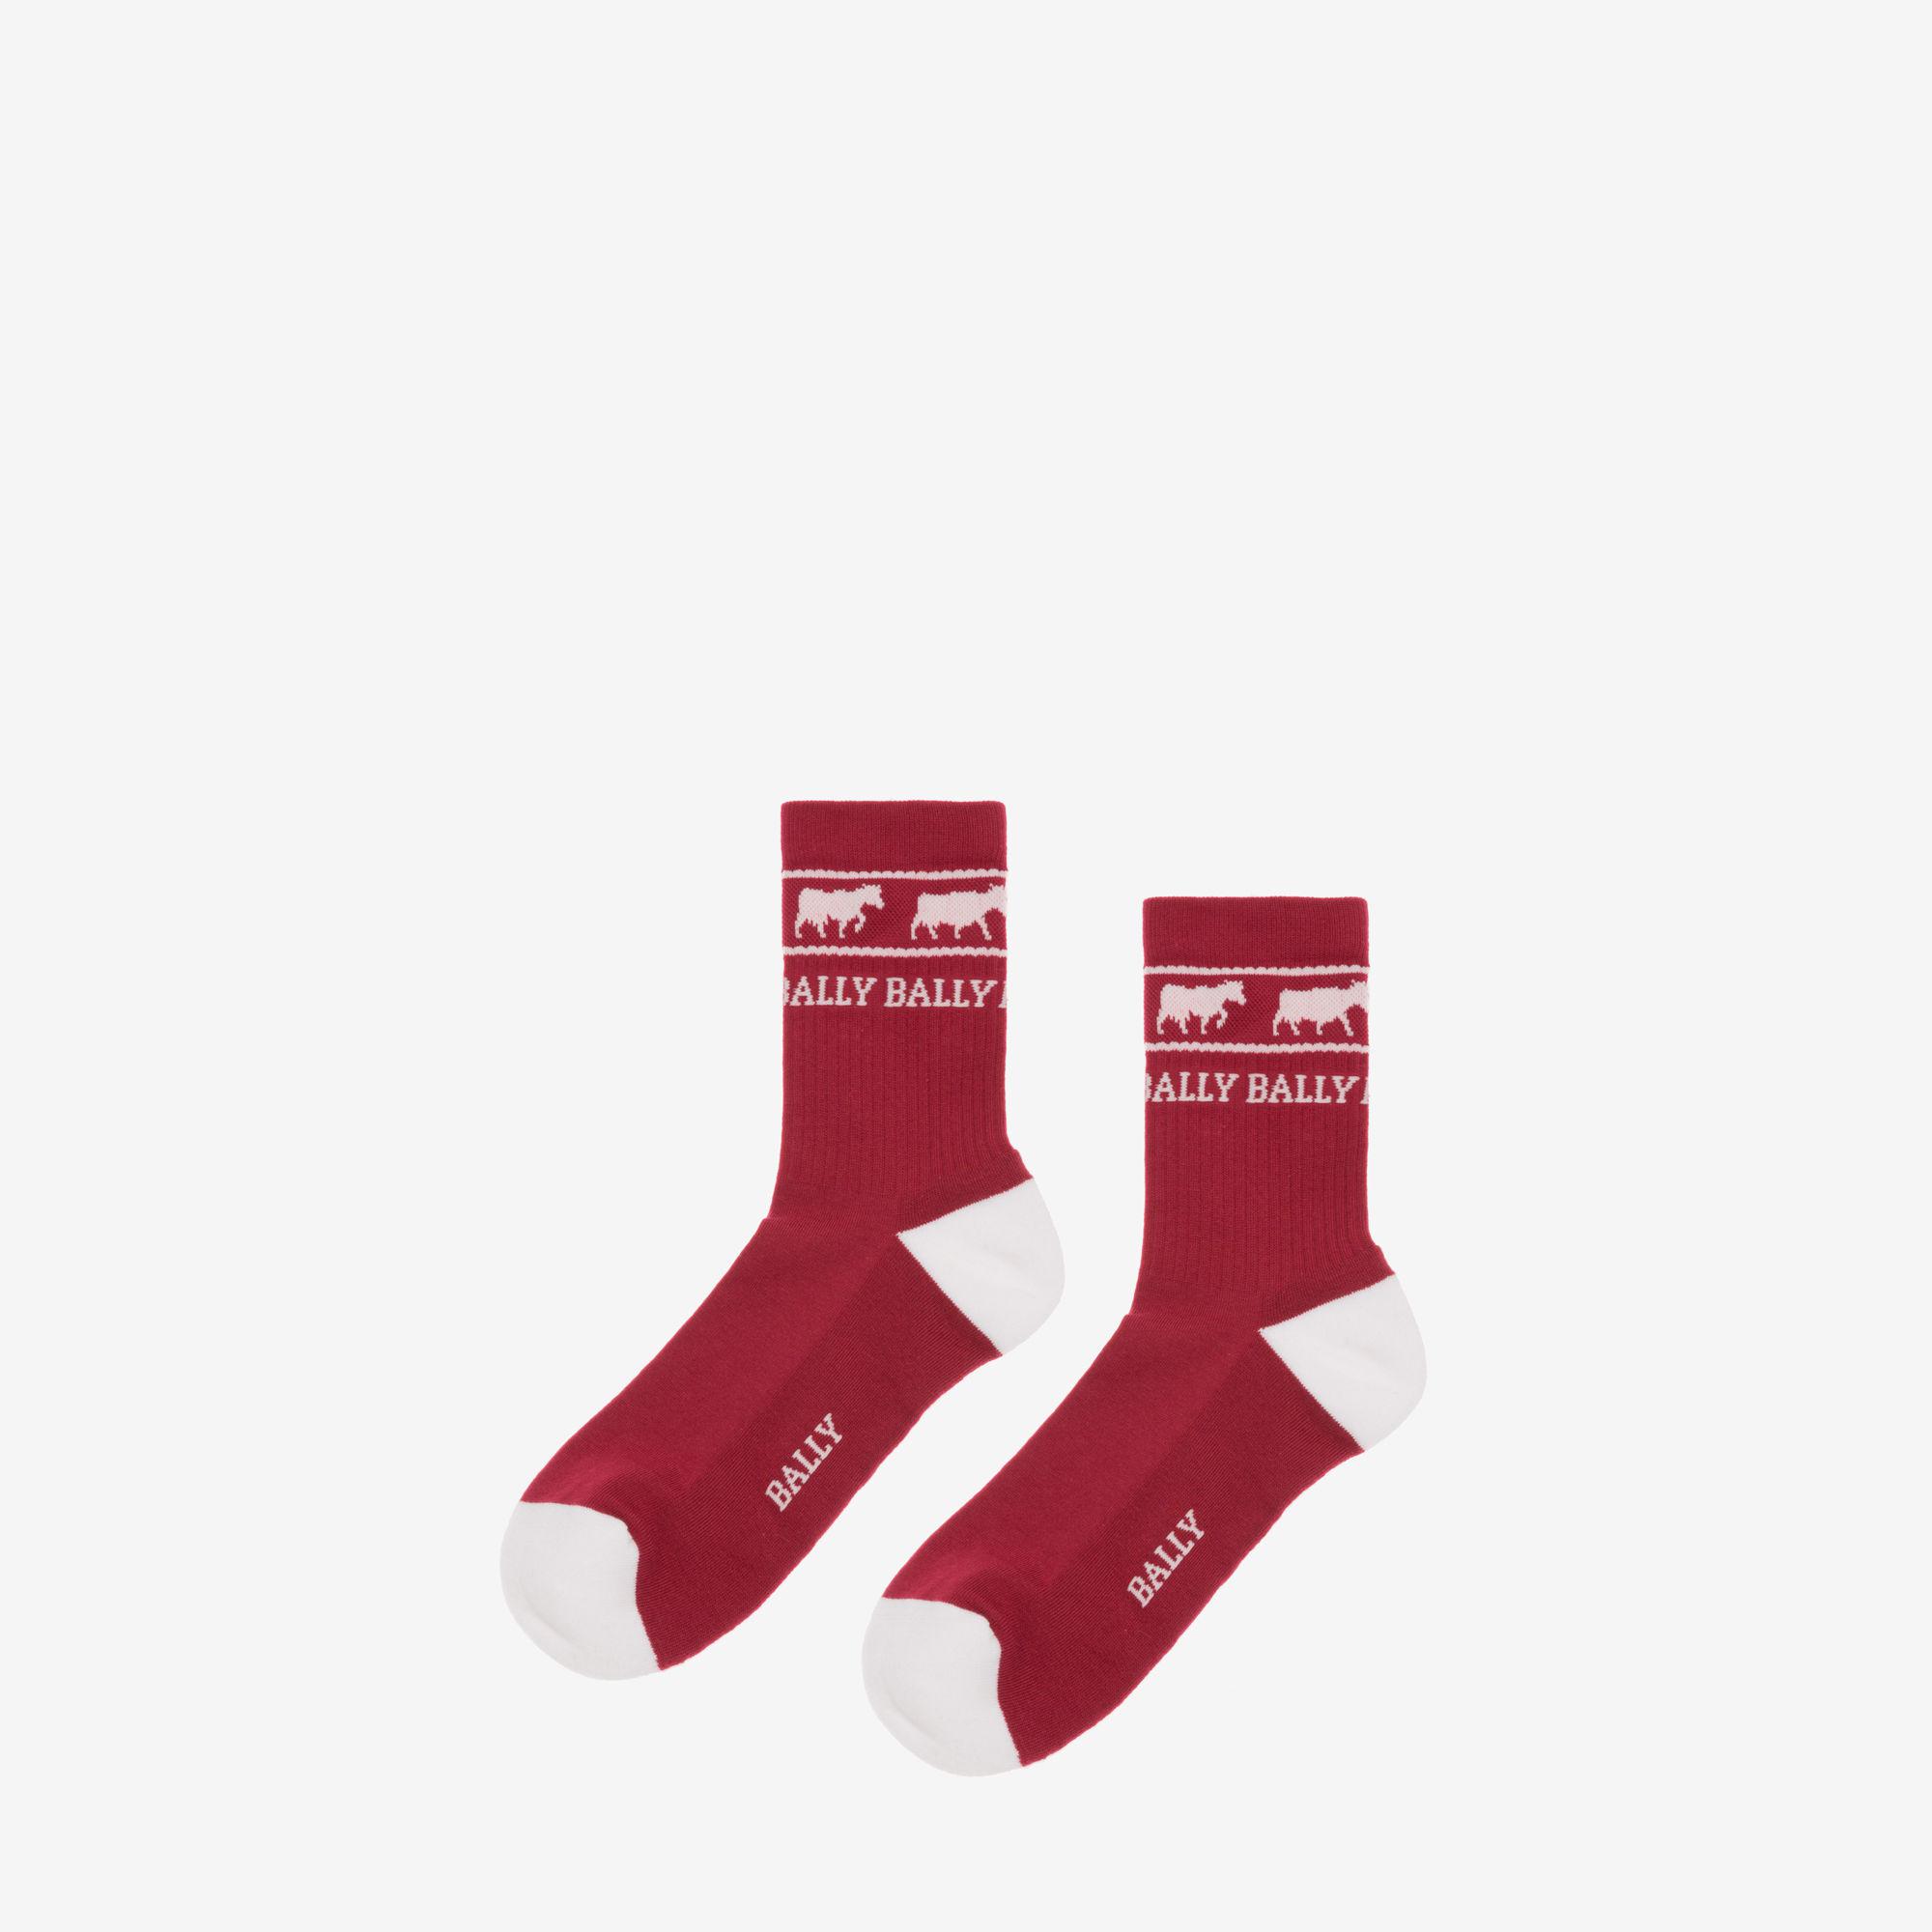 Bally Cotton Animal Socks in Red for Men - Lyst